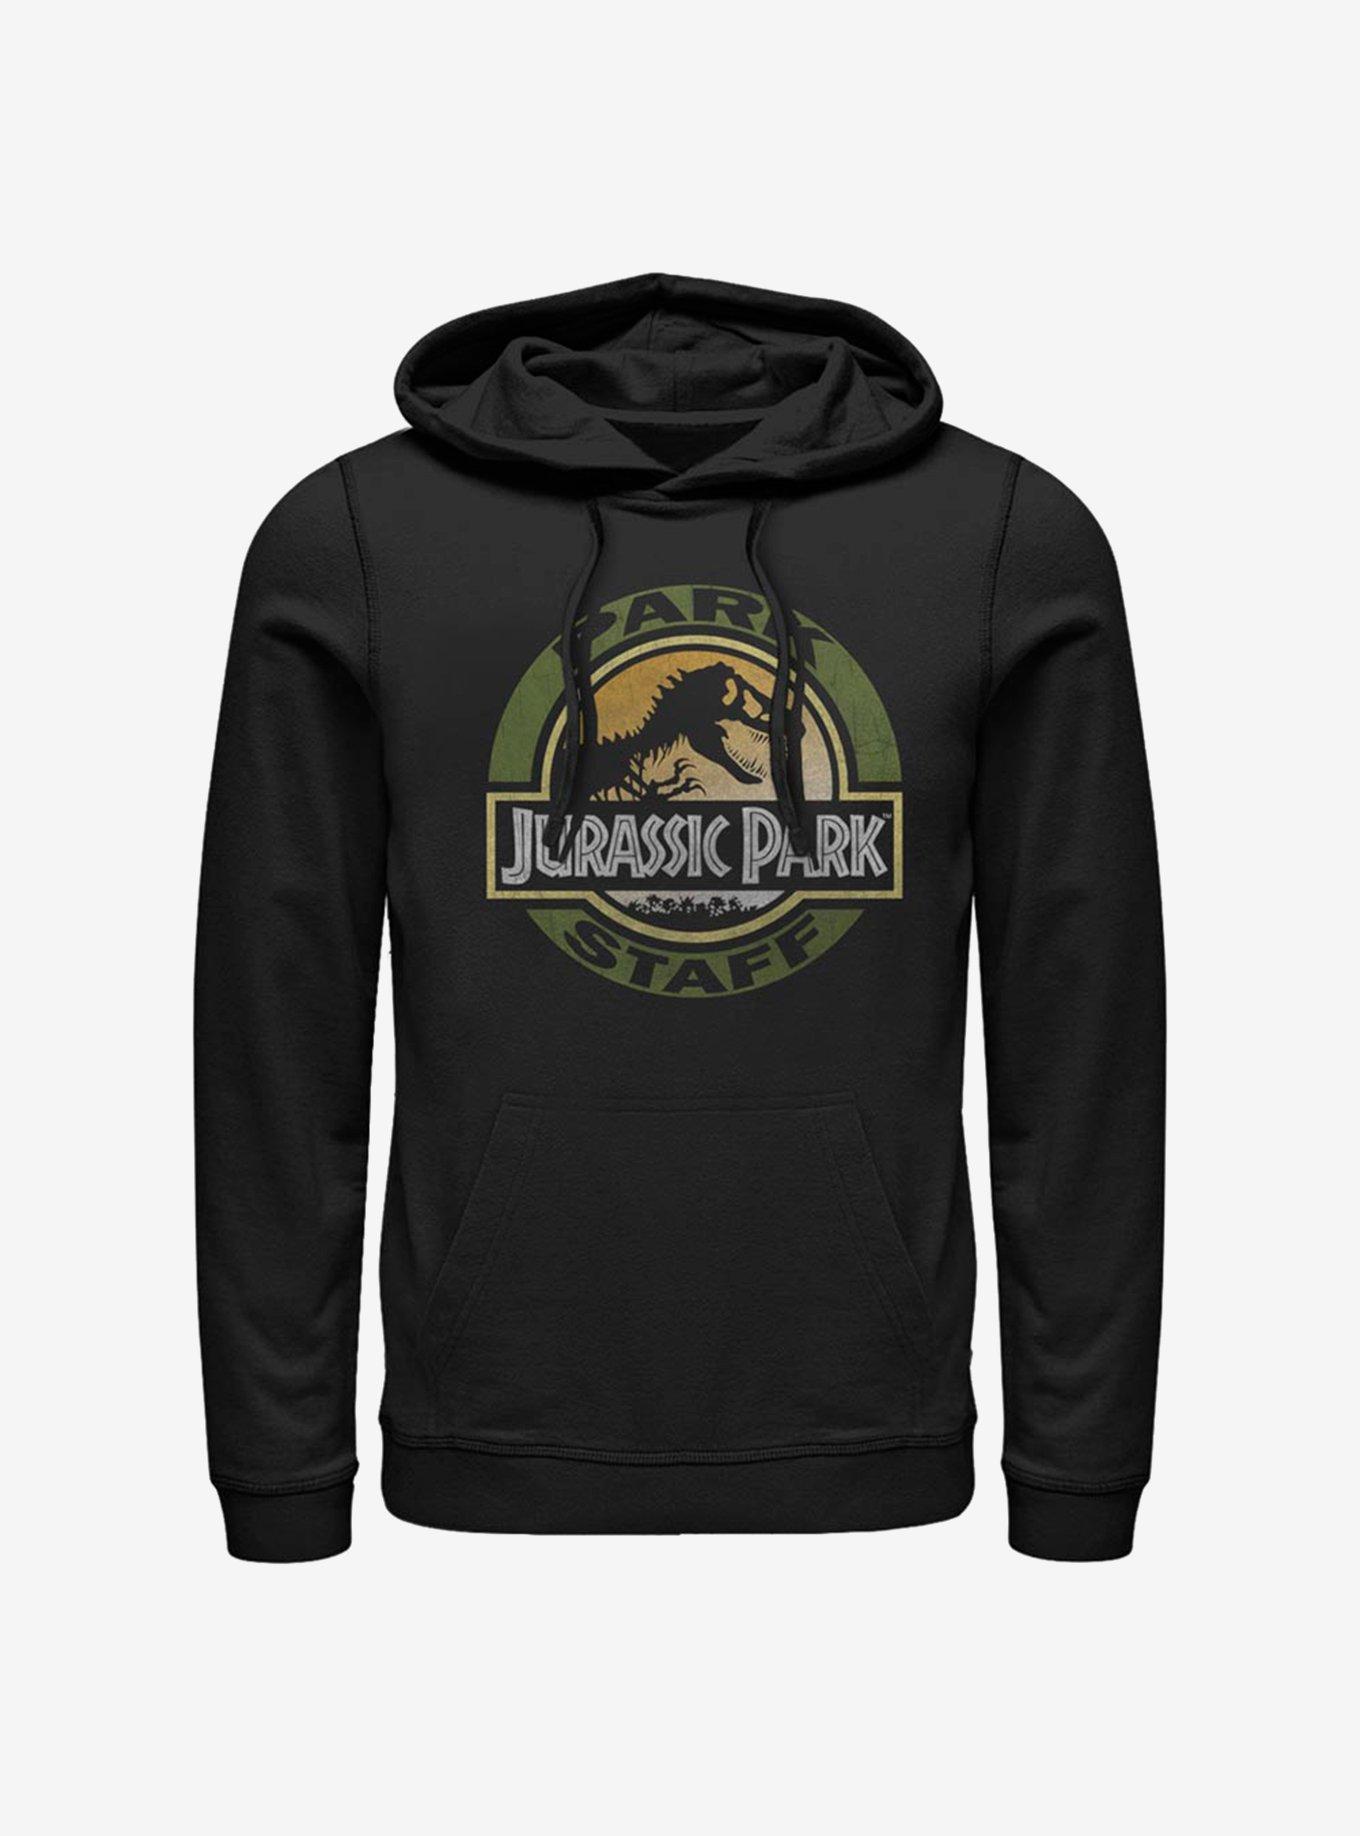 Jurassic Park Park Staff Hoodie, BLACK, hi-res